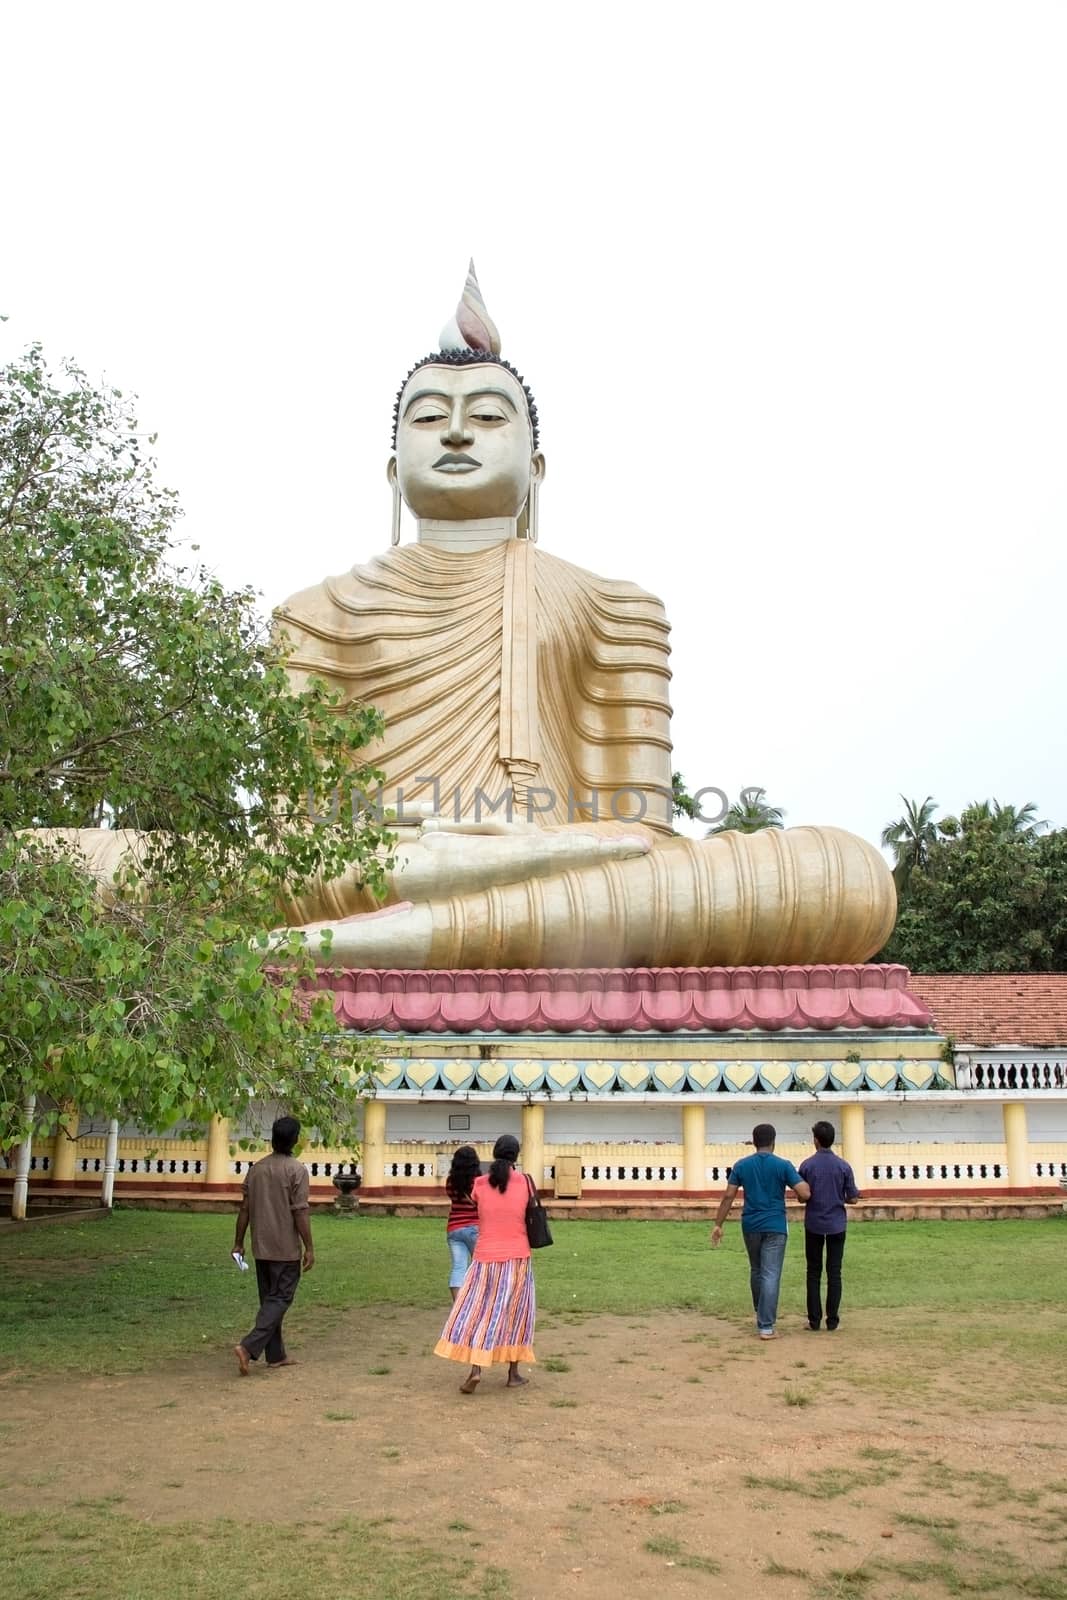 Sri Lanka's largest seated Buddha statue by ArtesiaWells